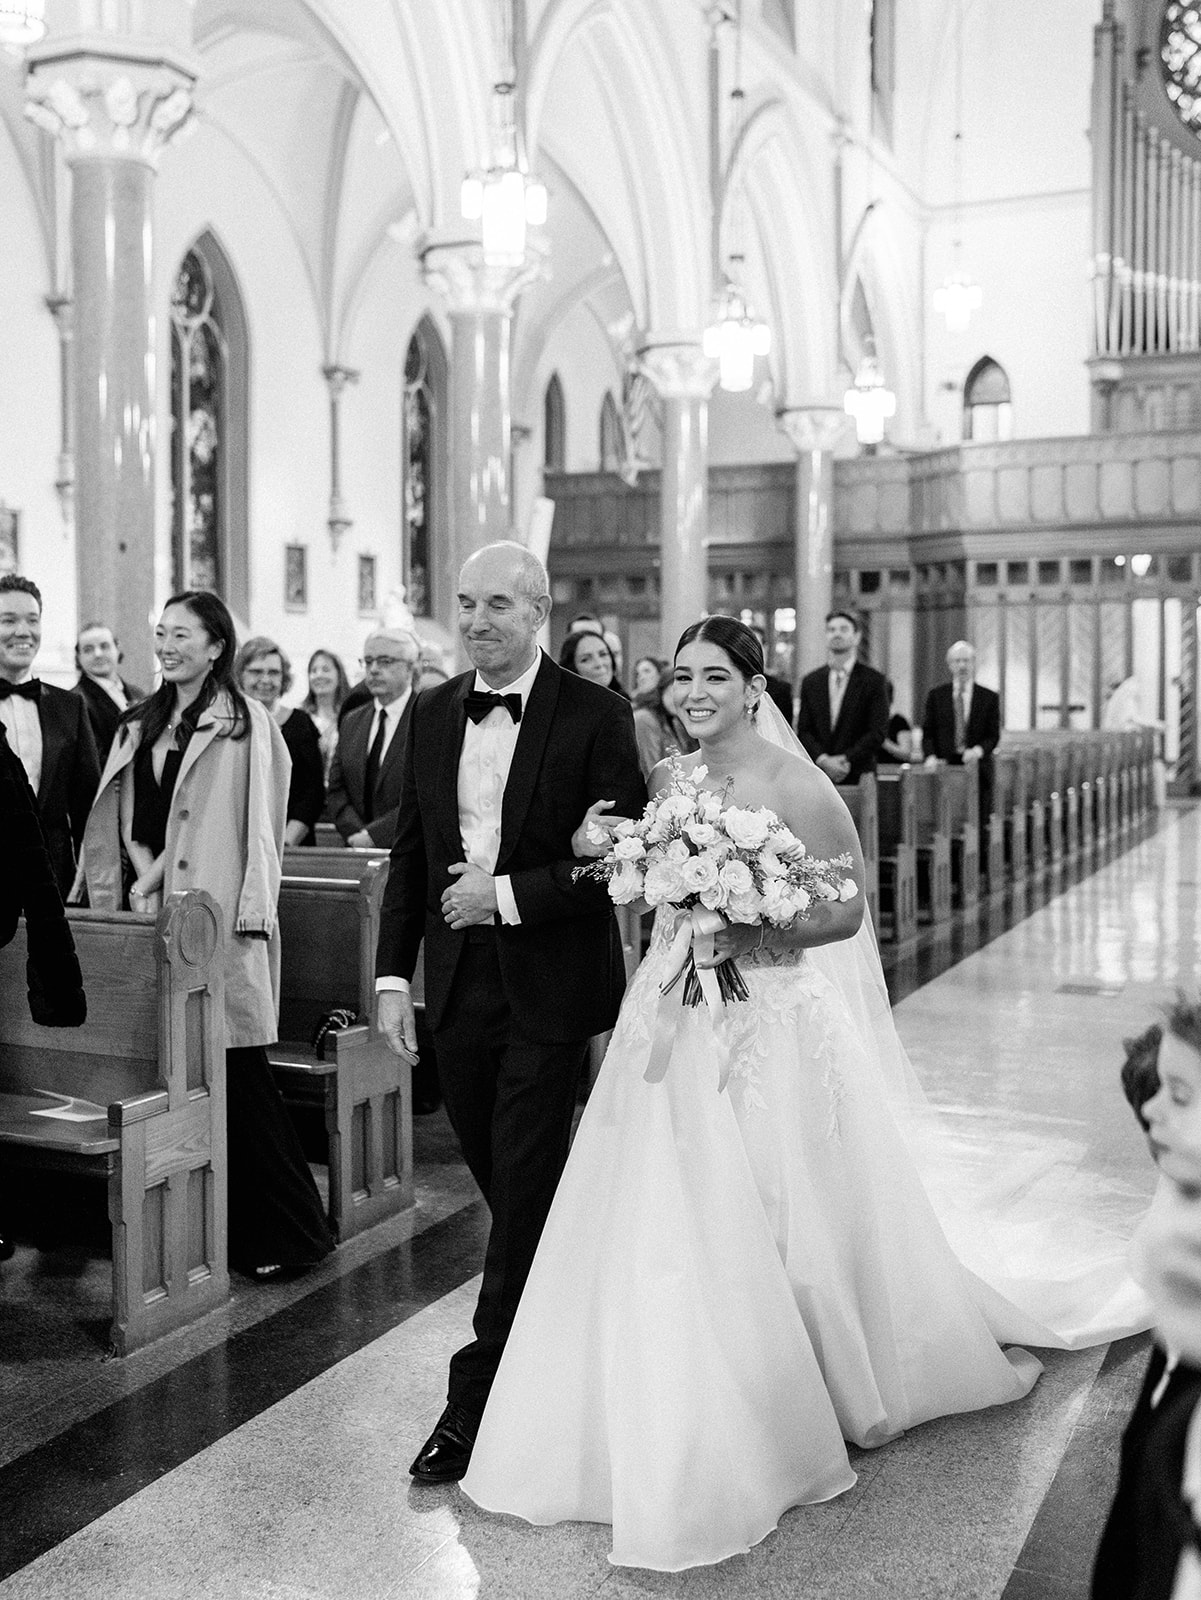 Wedding Ceremony at St Patricks Parrish in Washington DC by Jennifer Nolan 